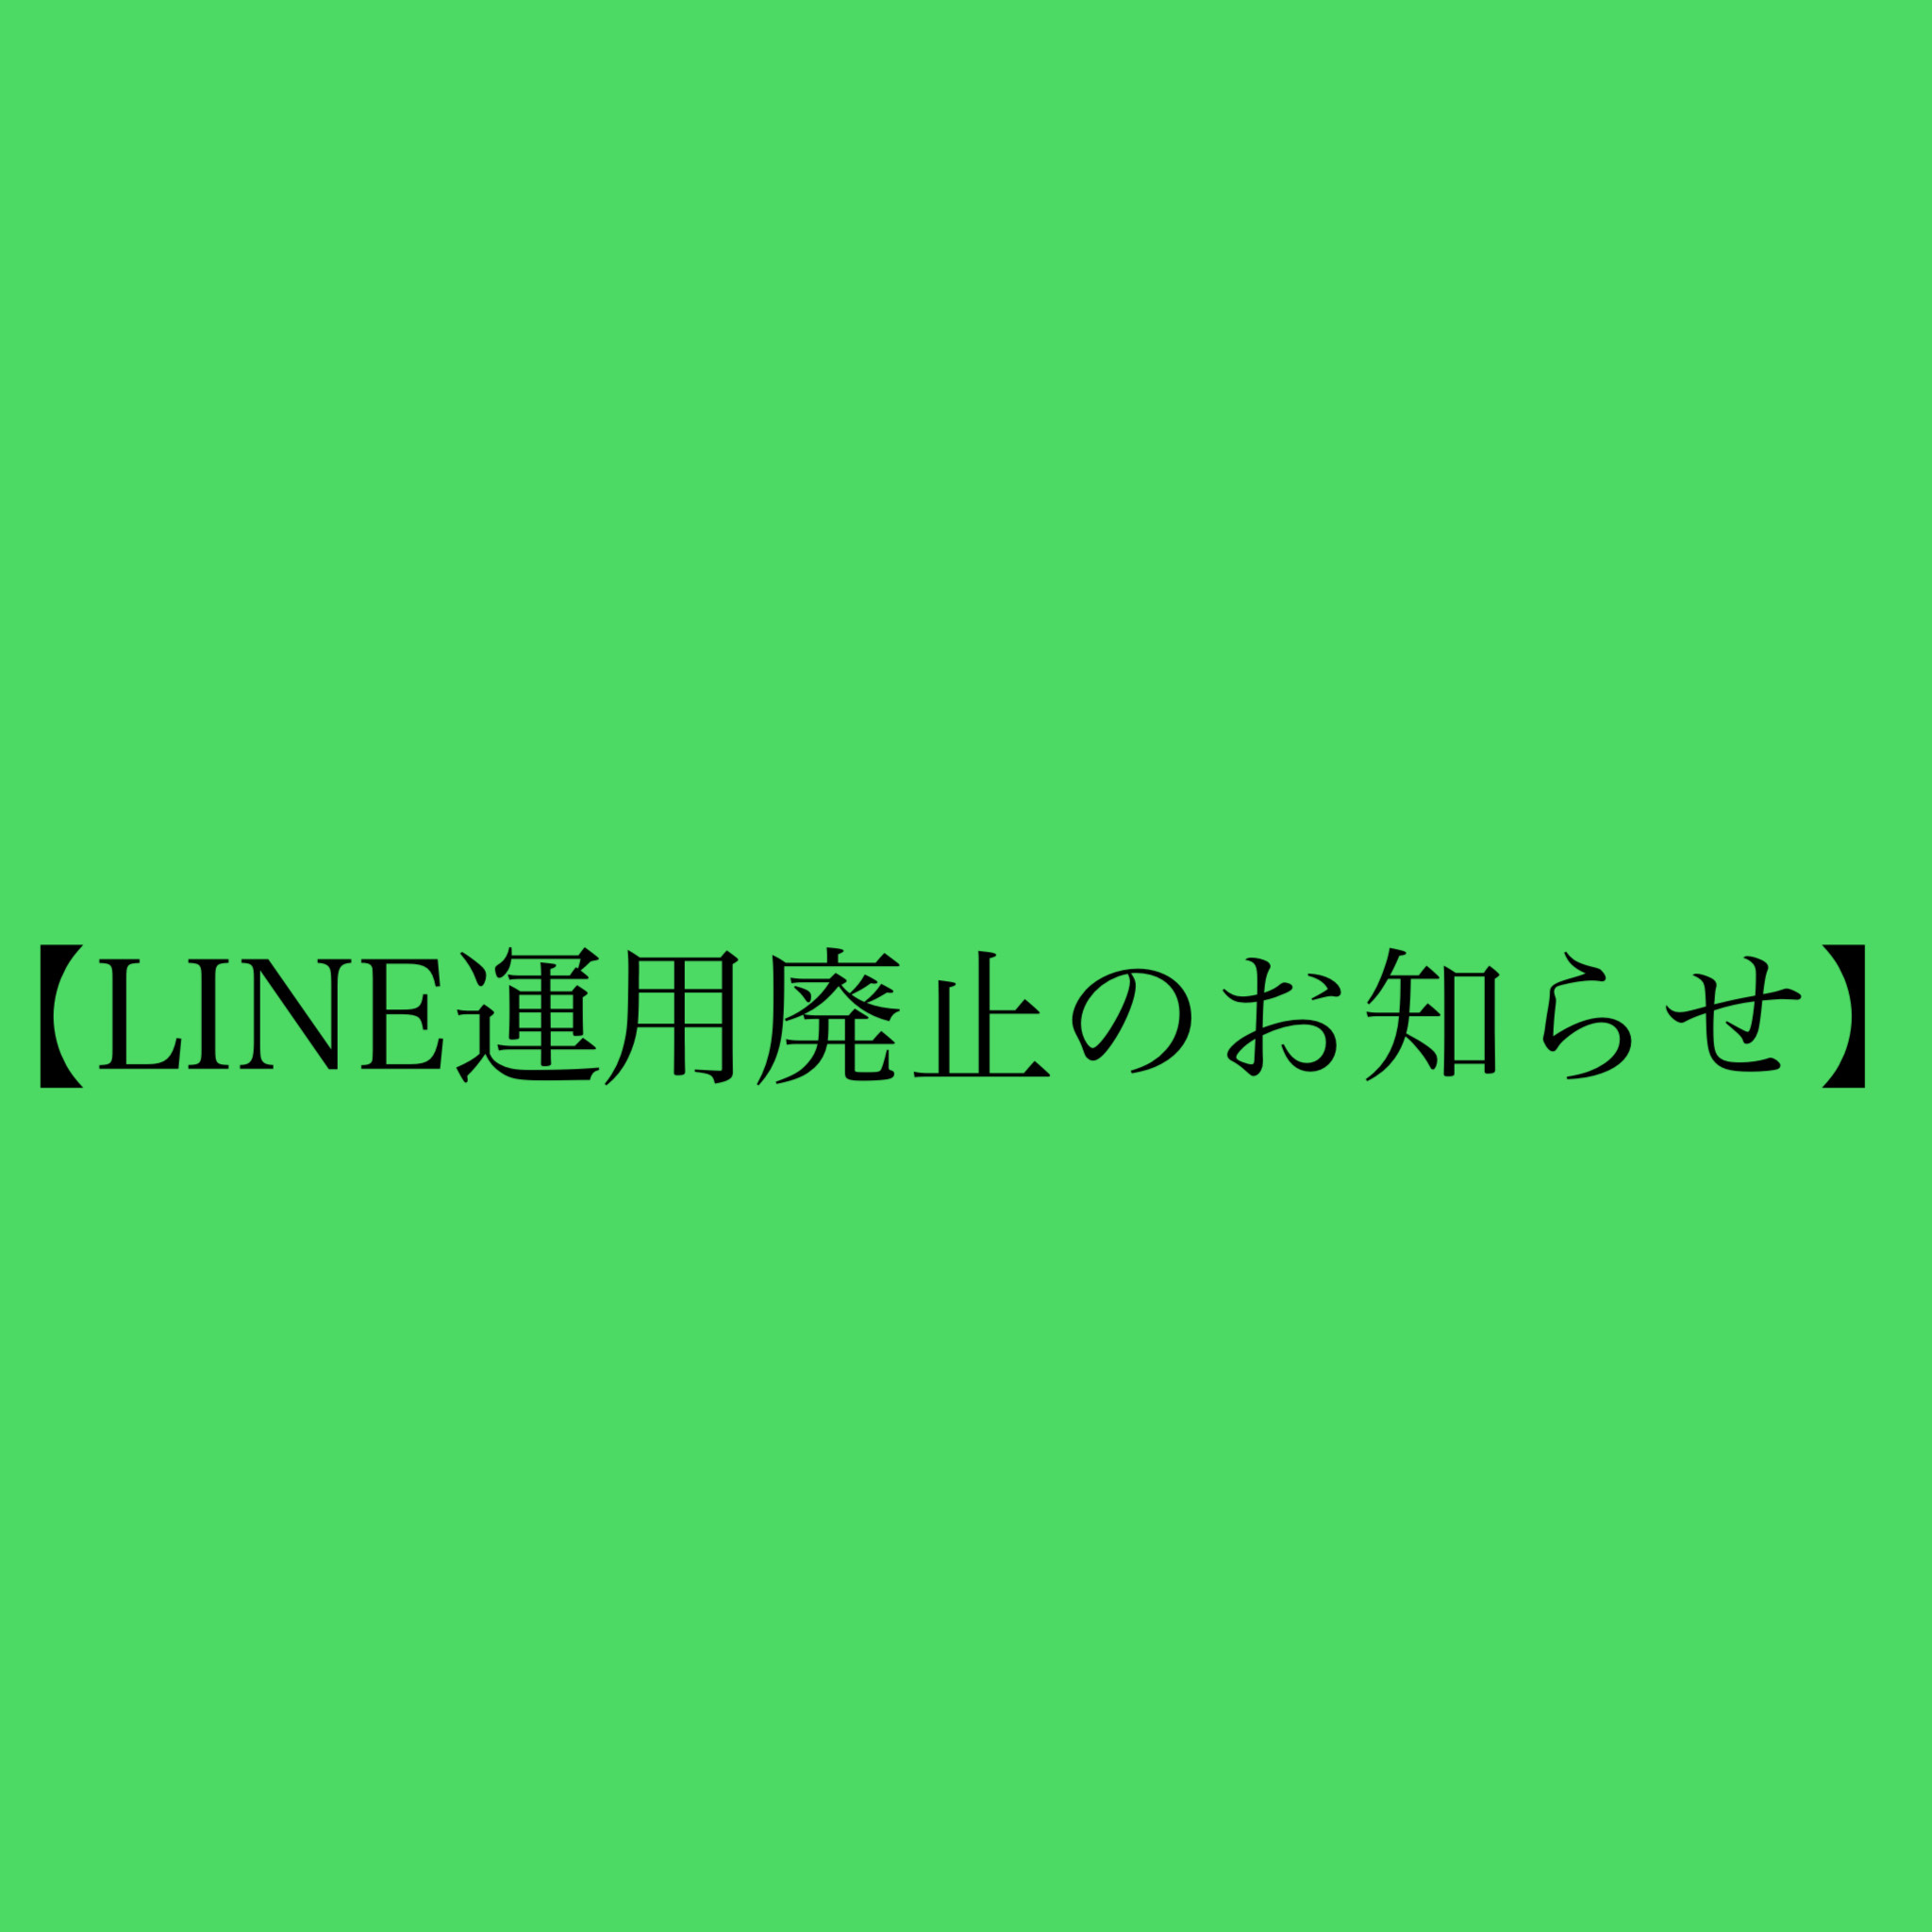 【LINE運用廃止のお知らせ】 